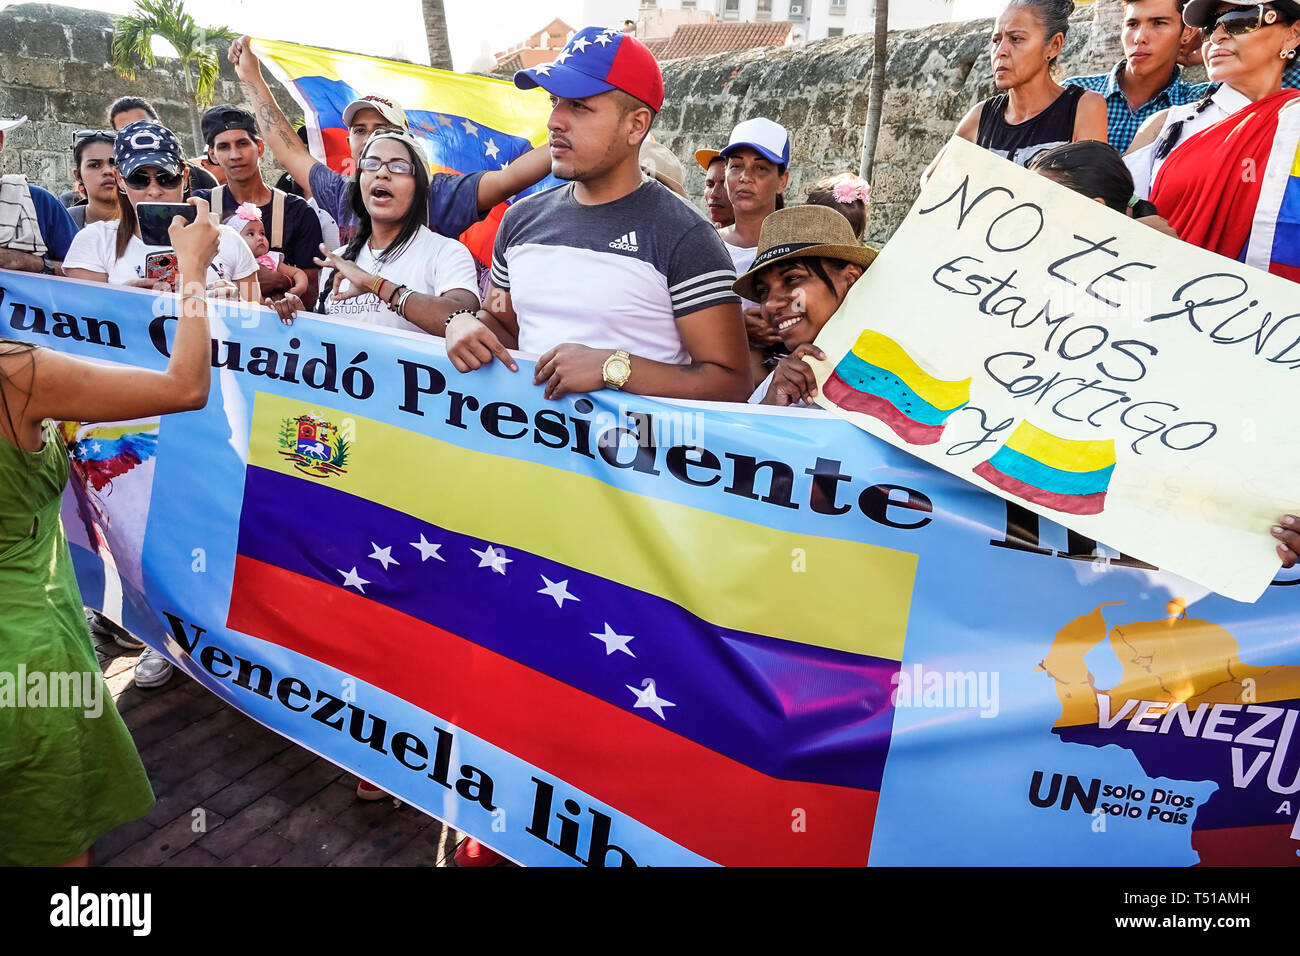 Cartagena Colombia, residentes hispanos, hombres hombres, mujeres mujeres, manifestantes, manifestaciones, exiliados venezolanos, apoyando a la presidenta interina Foto de stock